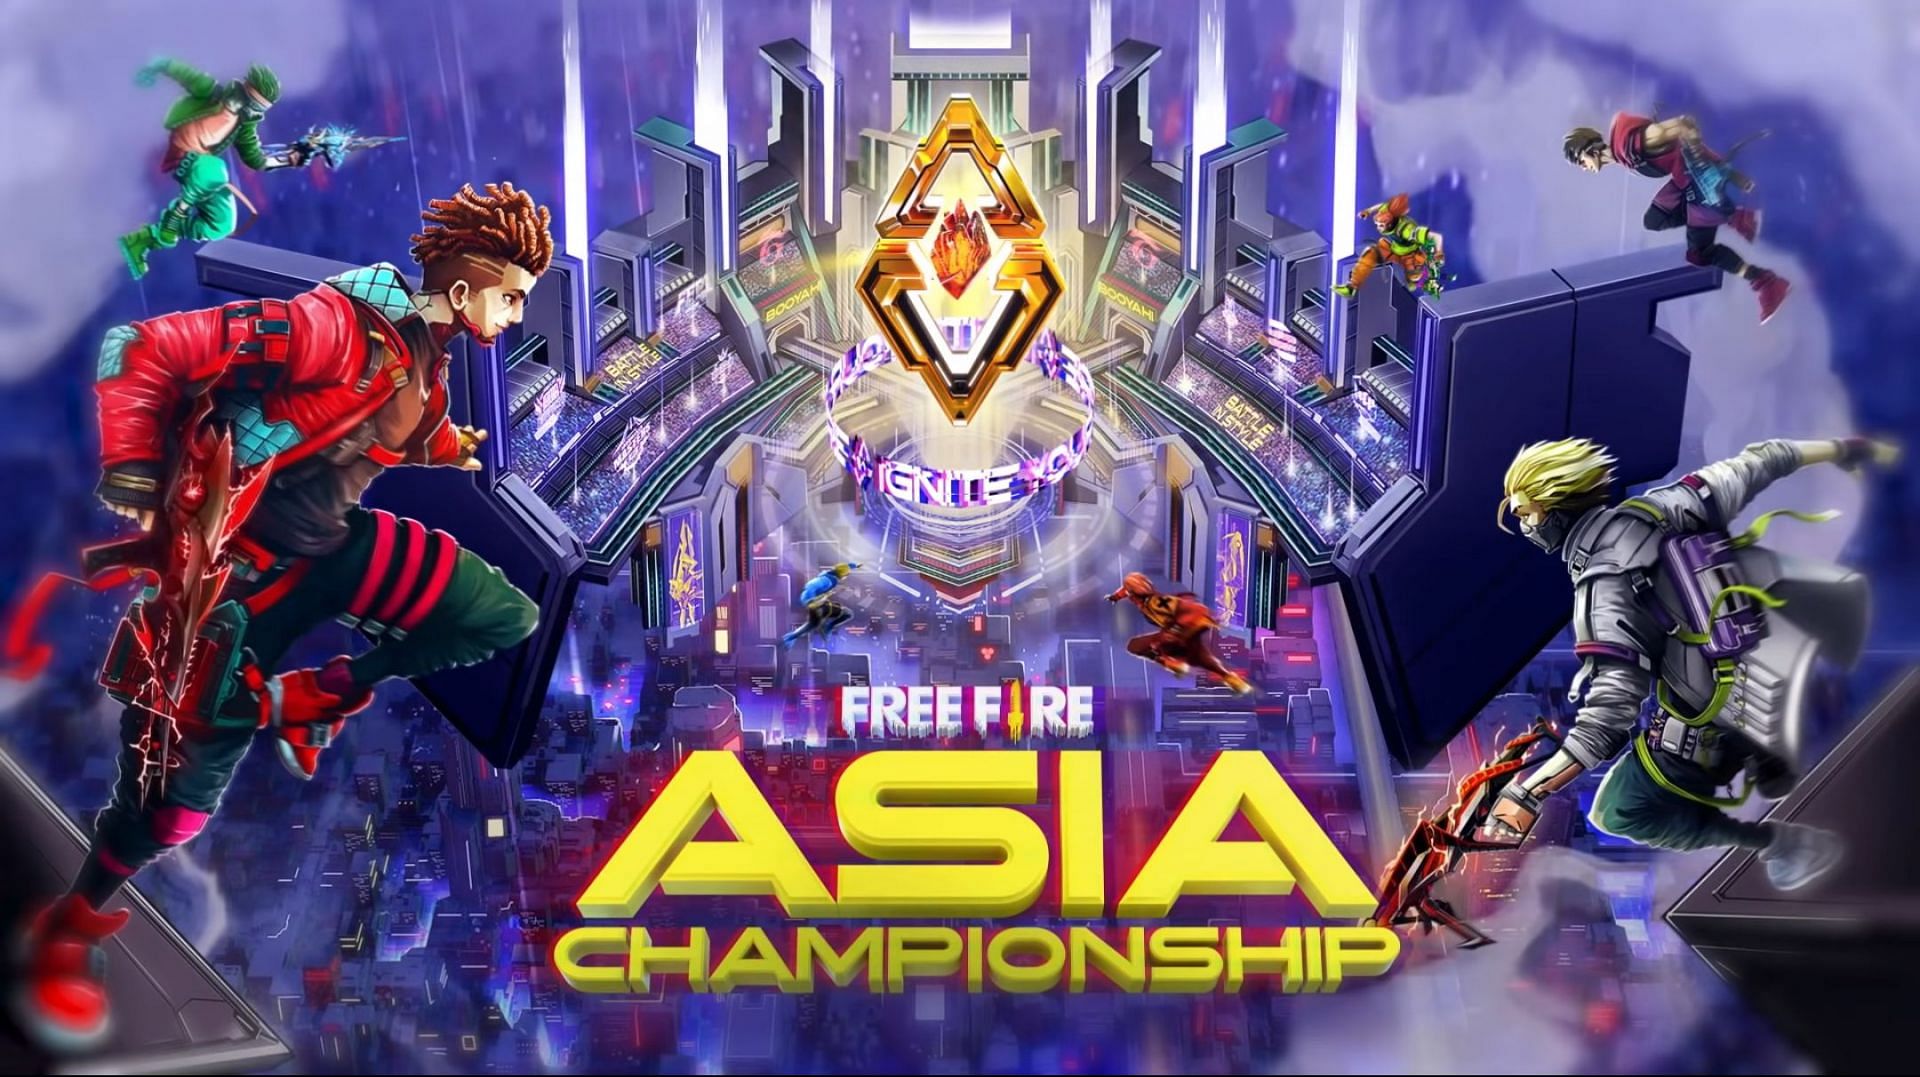 Free Fire Asia Championship 2021 (Image via Garena)